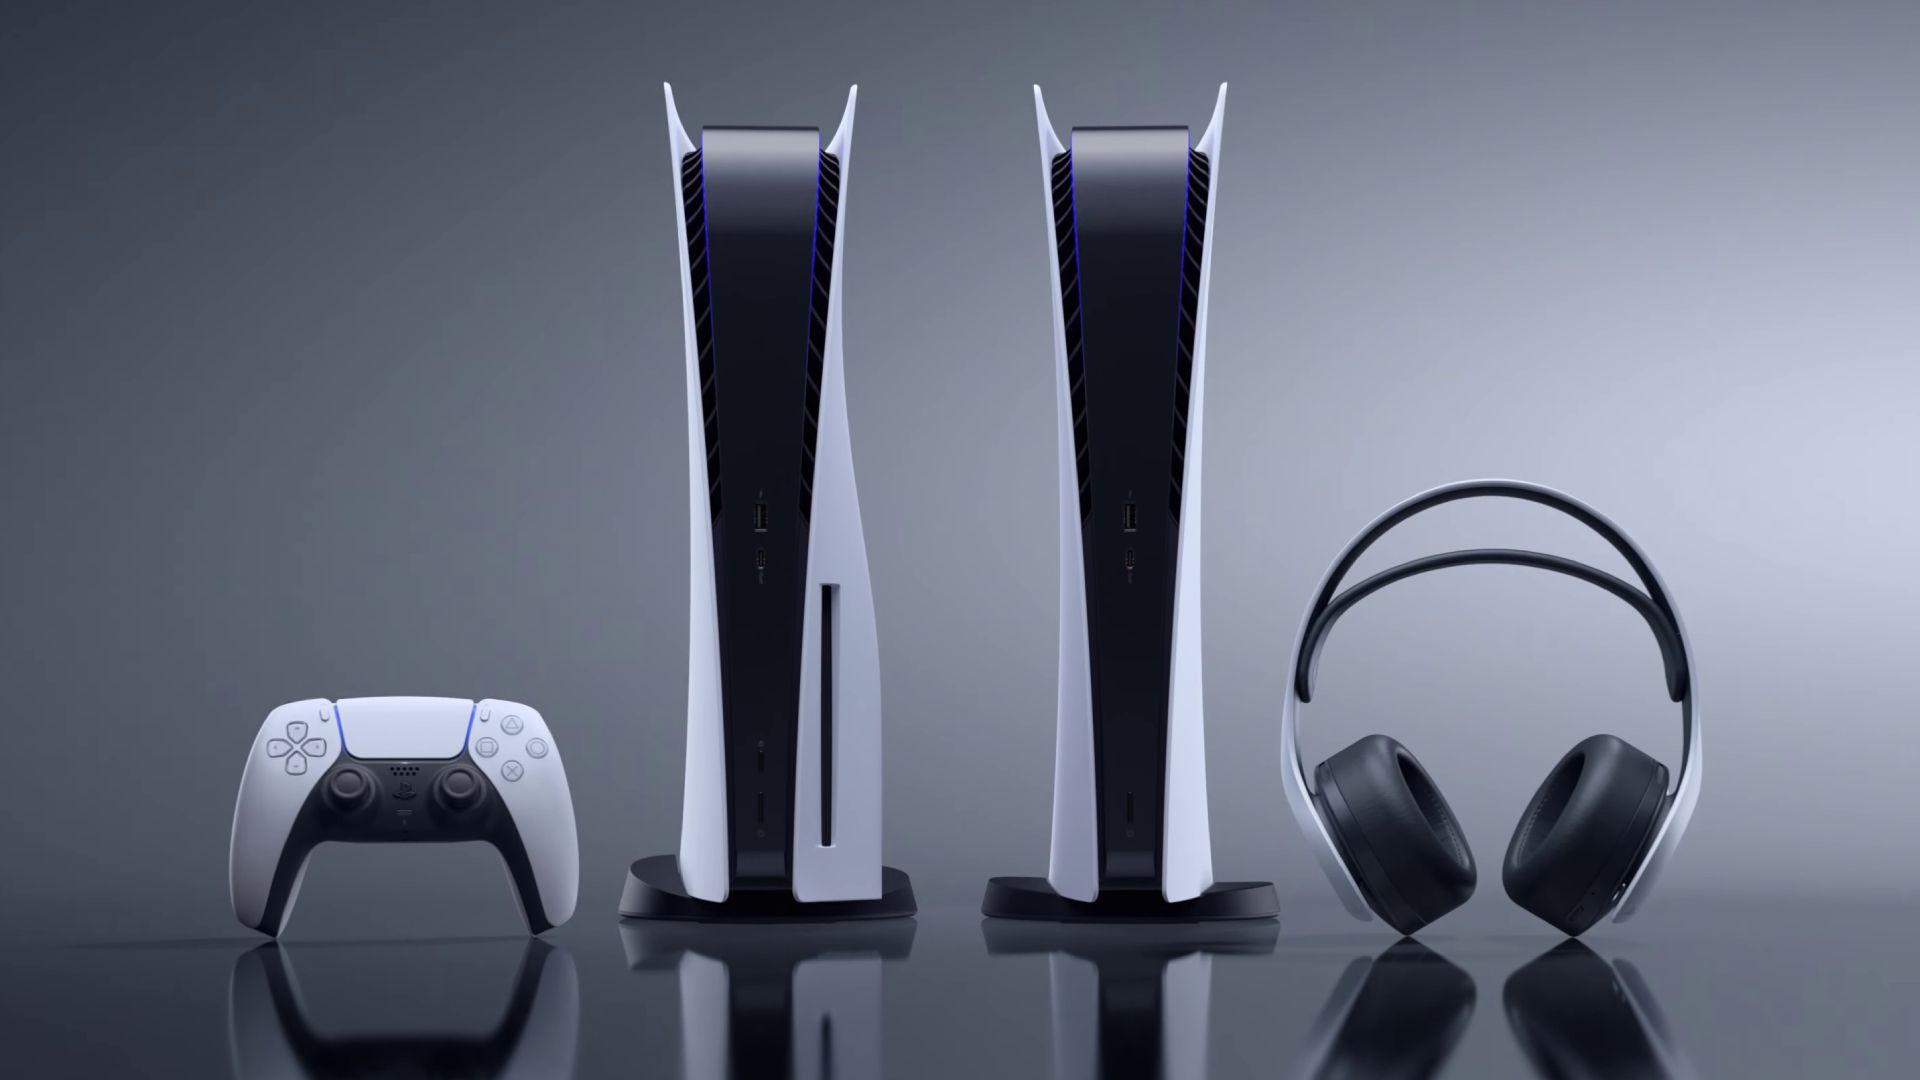 PS5 consoles, DualSense, and Pulse 3D audio headset